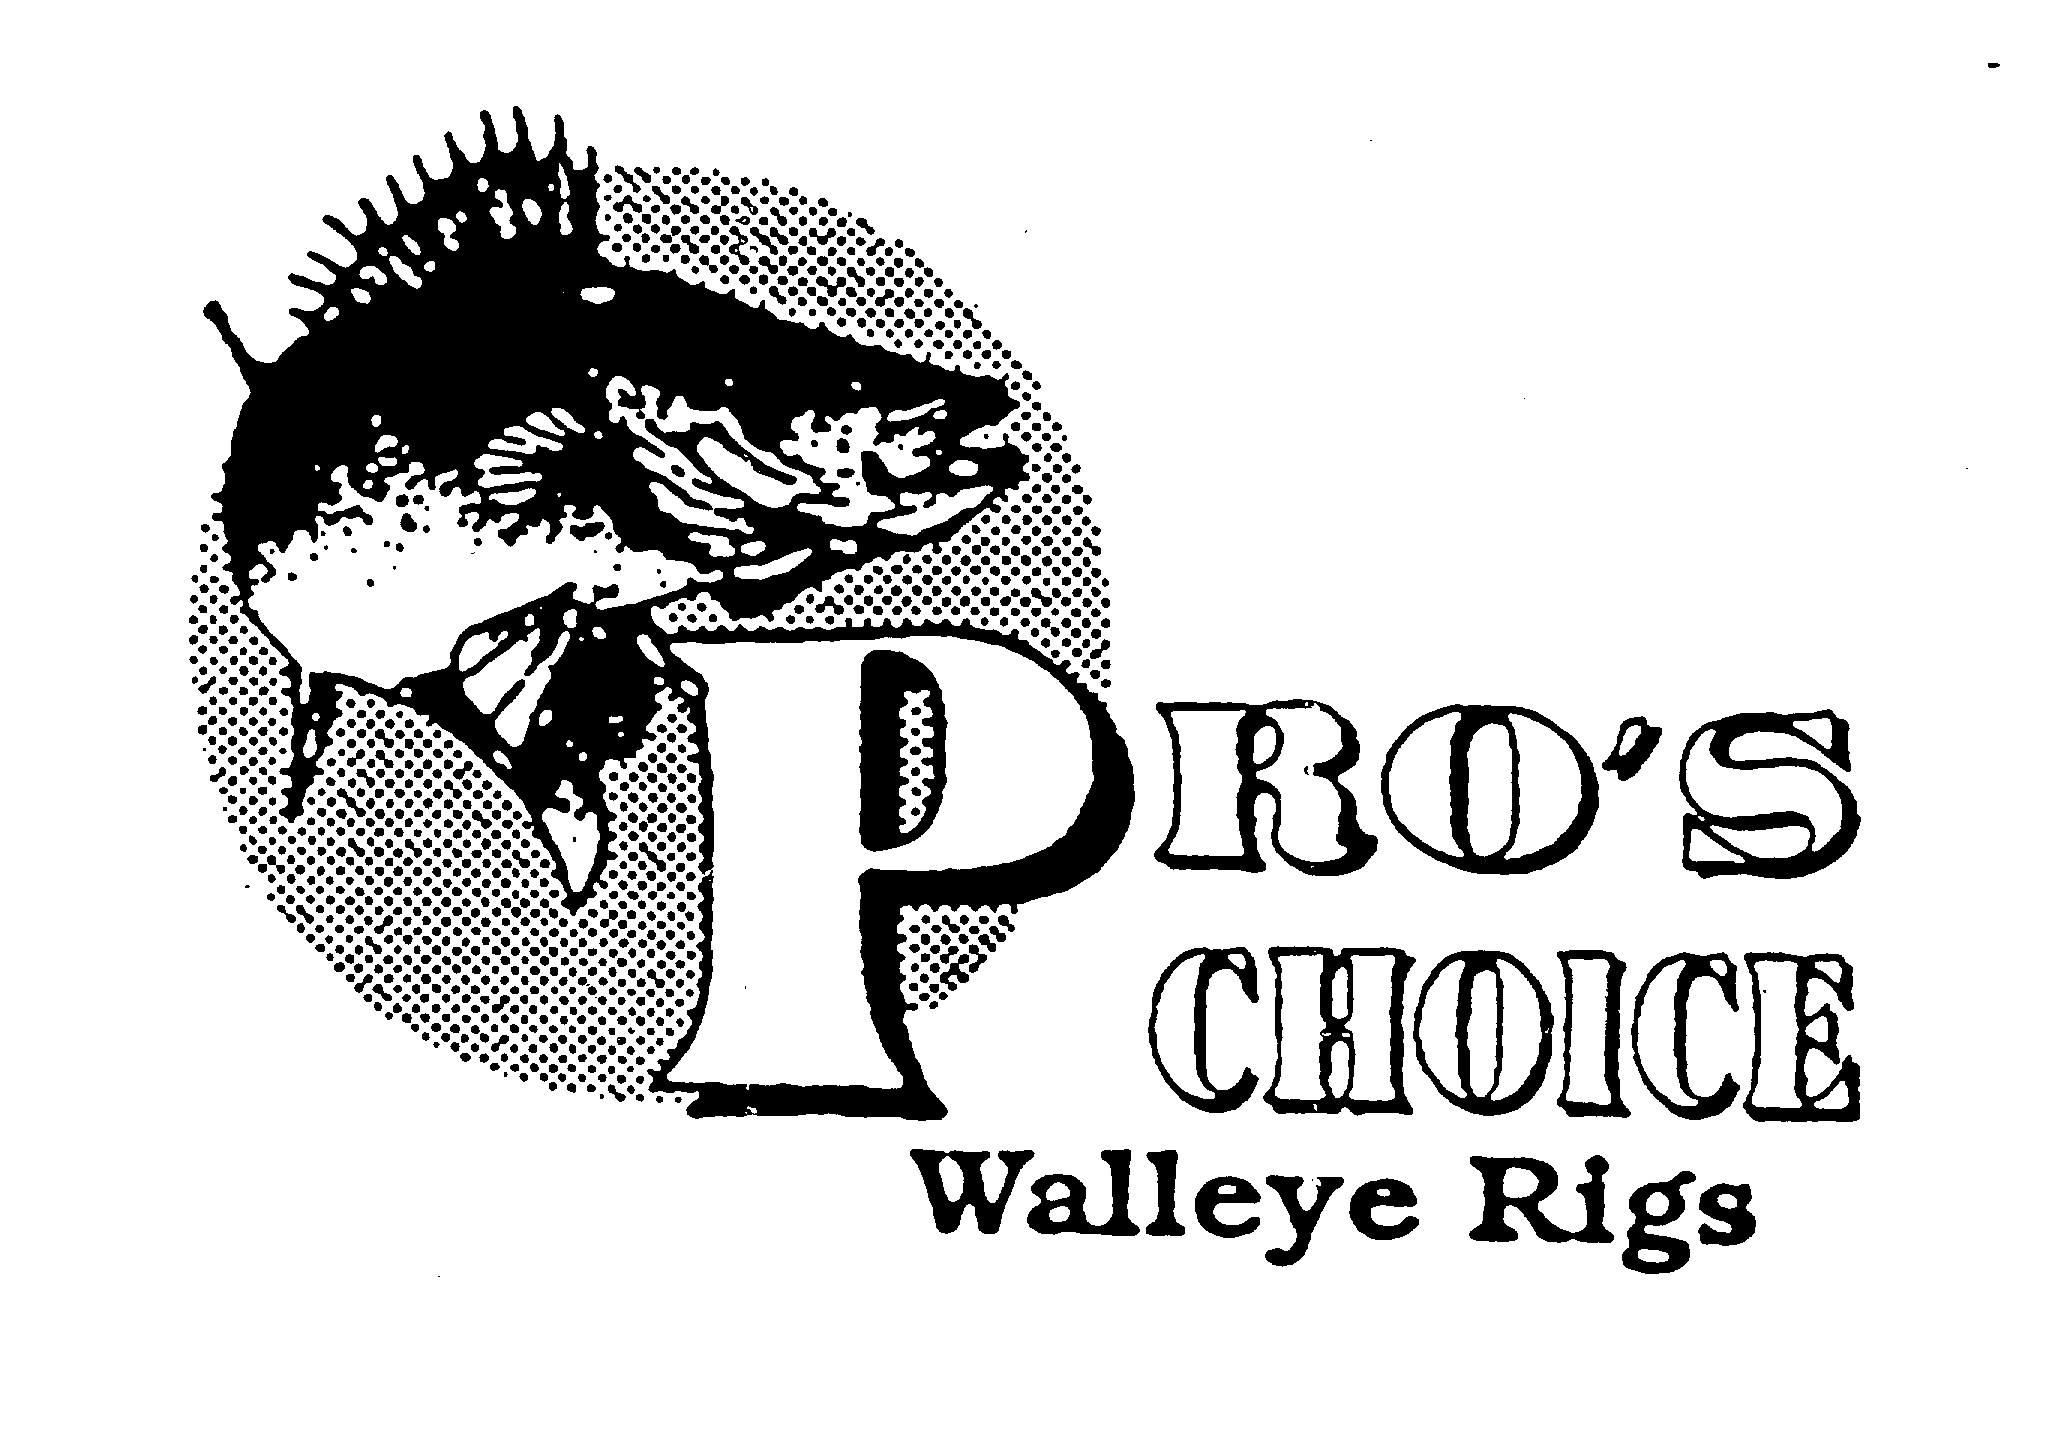  PRO'S CHOICE WALLEYE RIGS